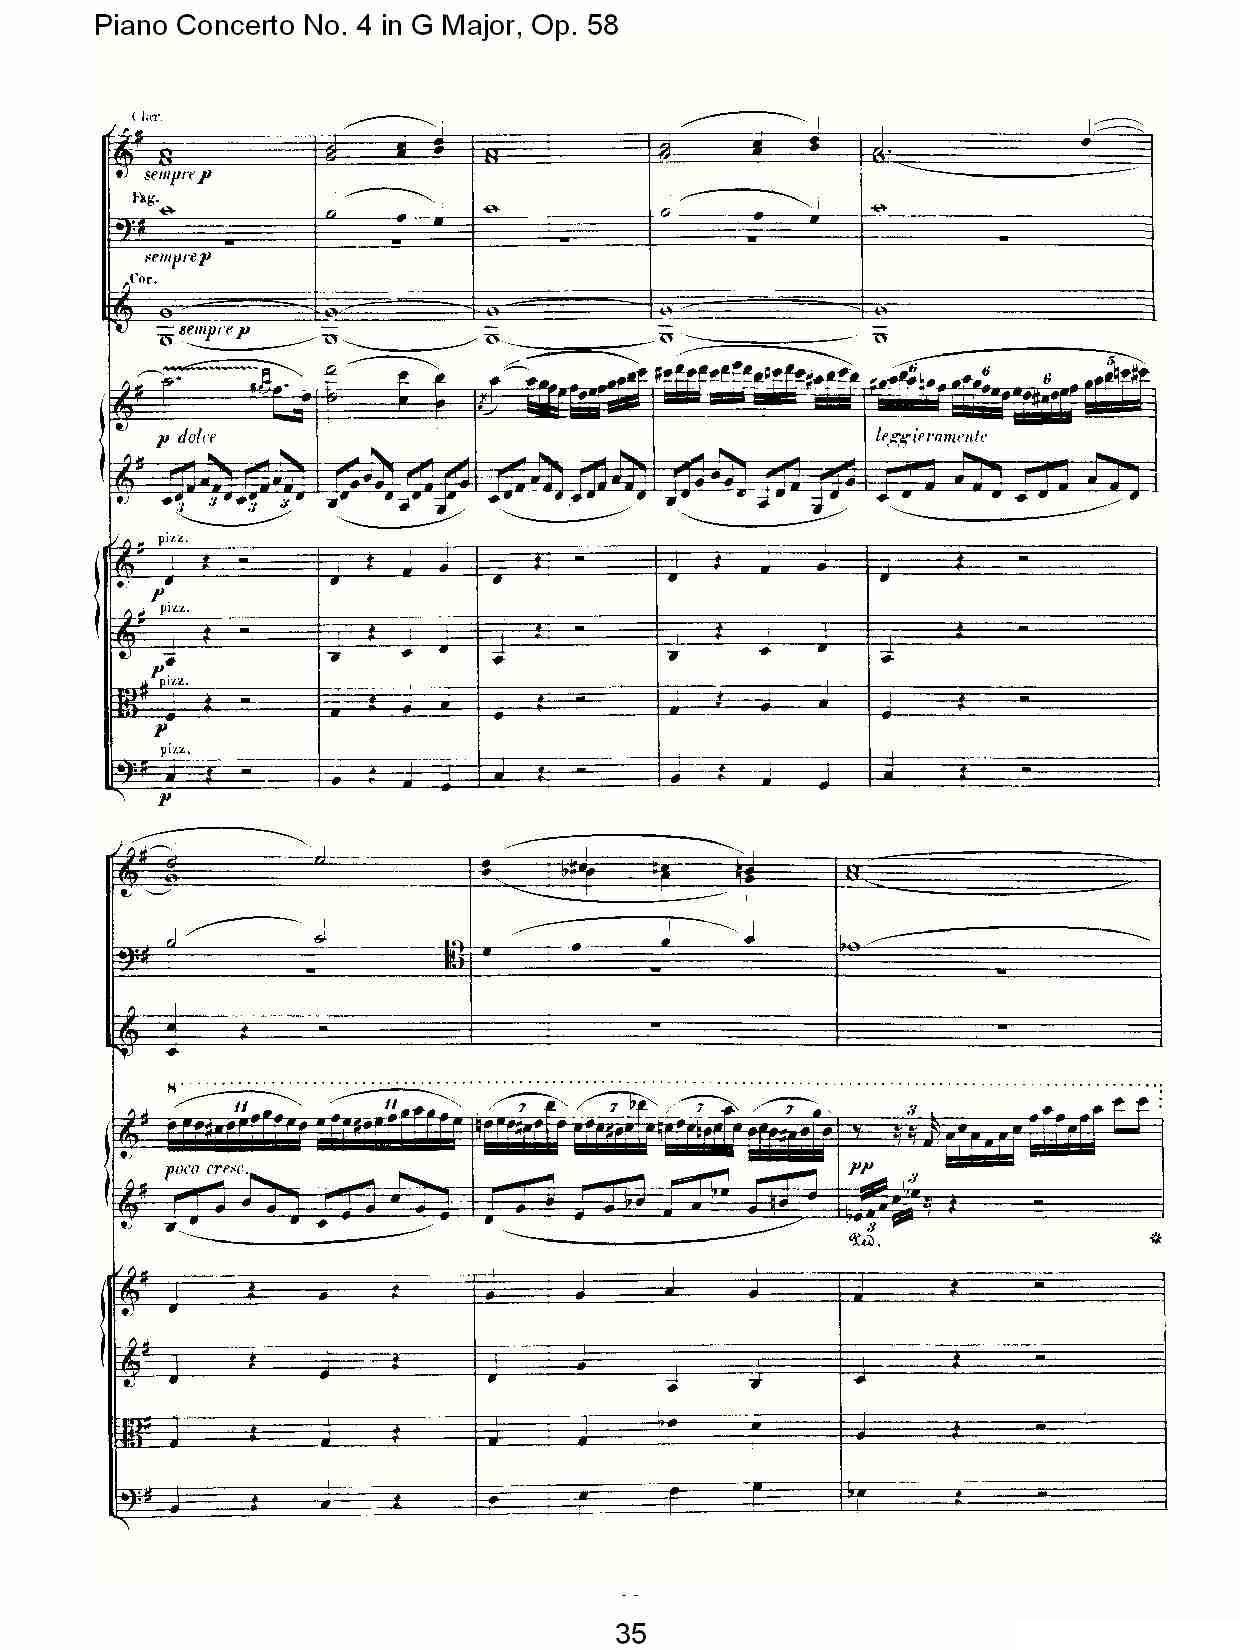 Ｇ大调钢琴第四协奏曲 Op.58 第一乐章钢琴曲谱（图35）